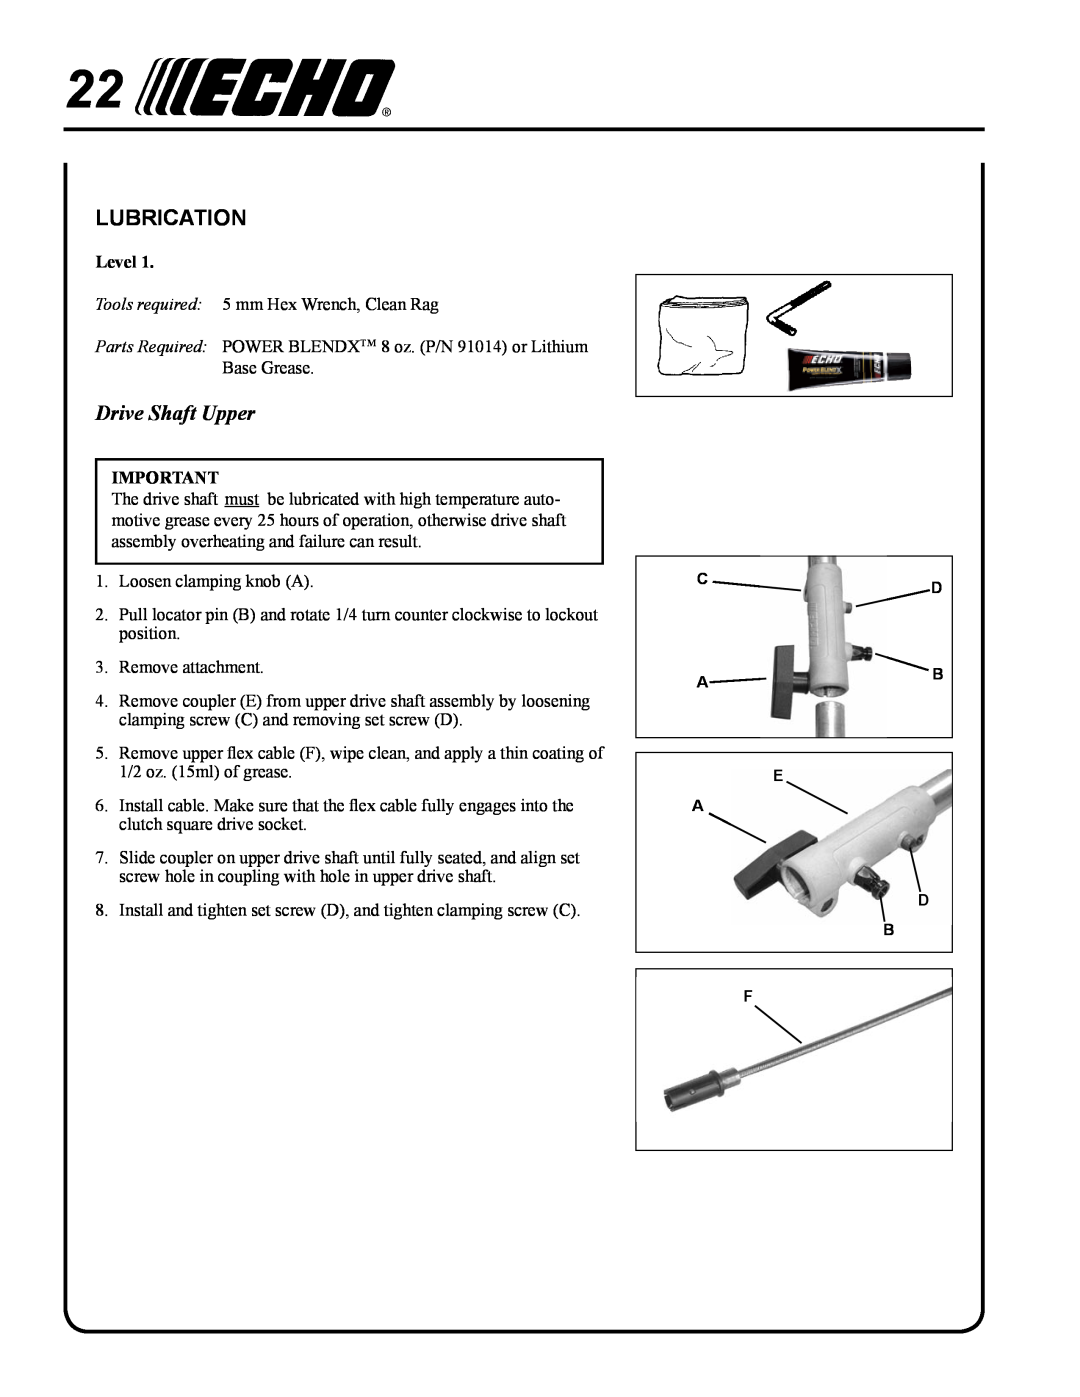 Echo PAS-265 manual lubrication, Drive Shaft Upper 